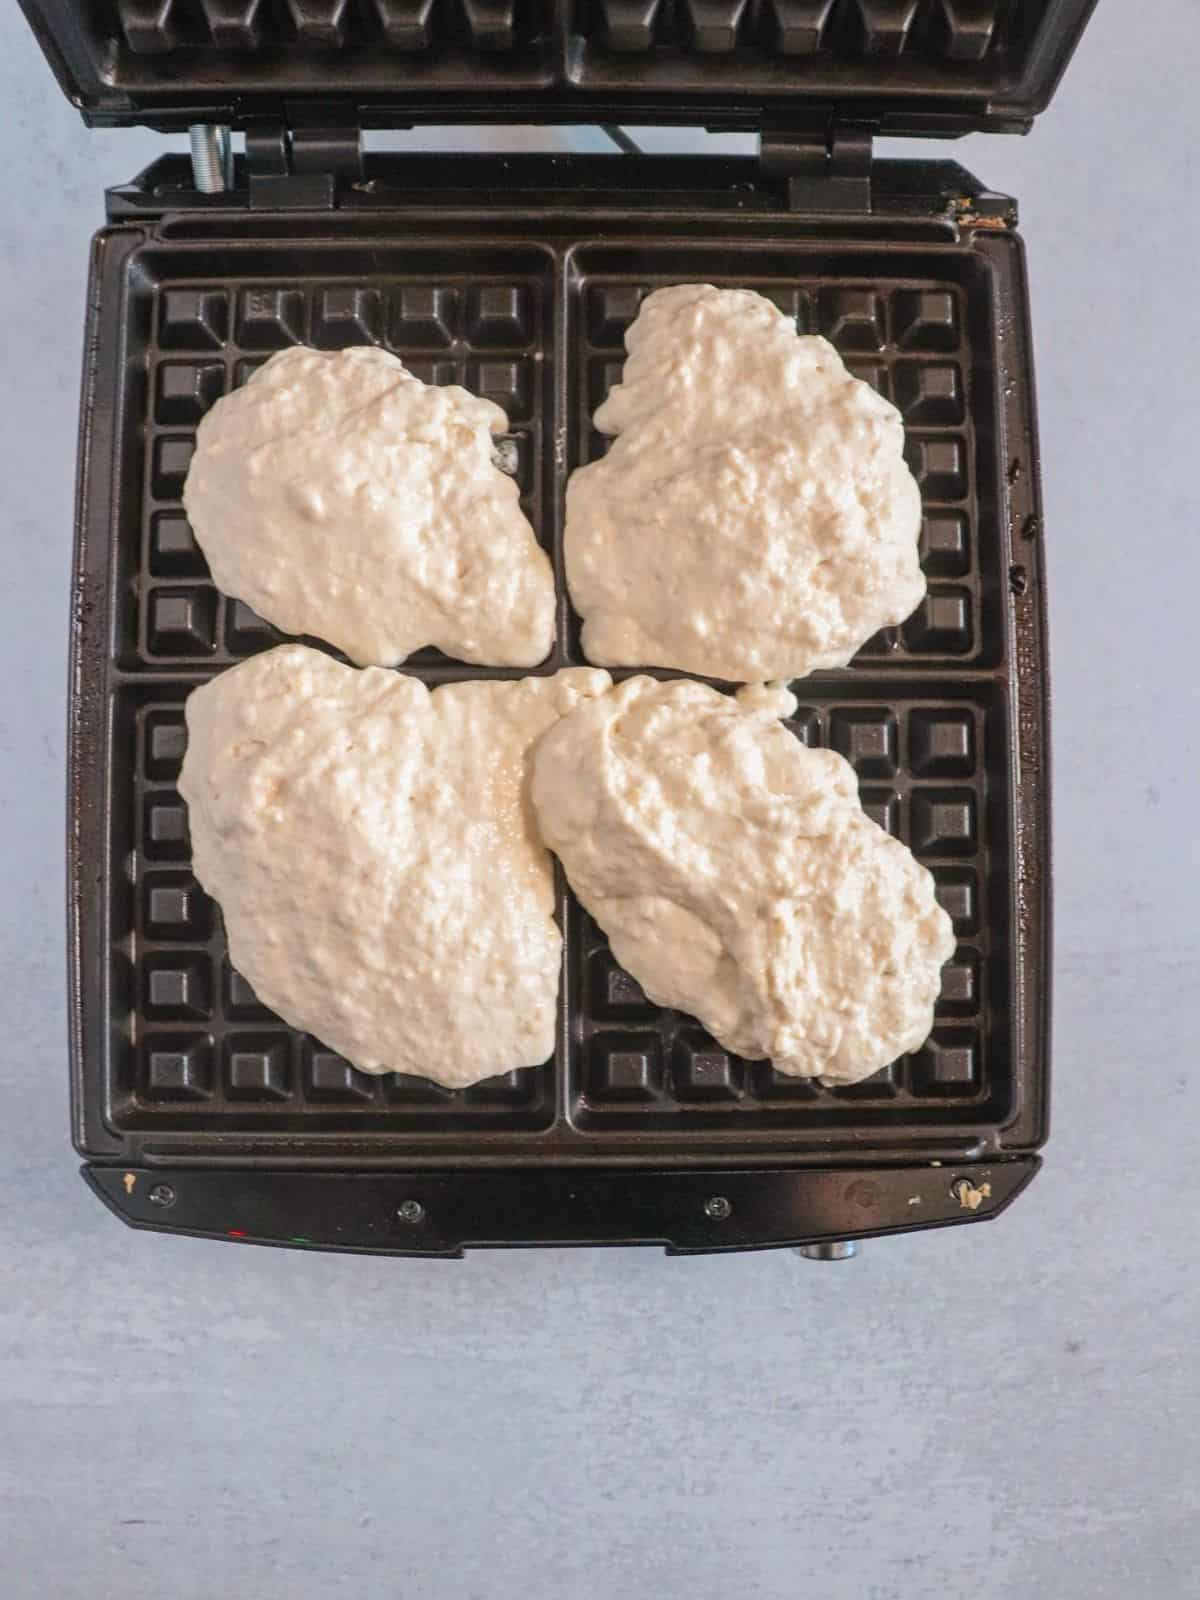 batter in waffle maker